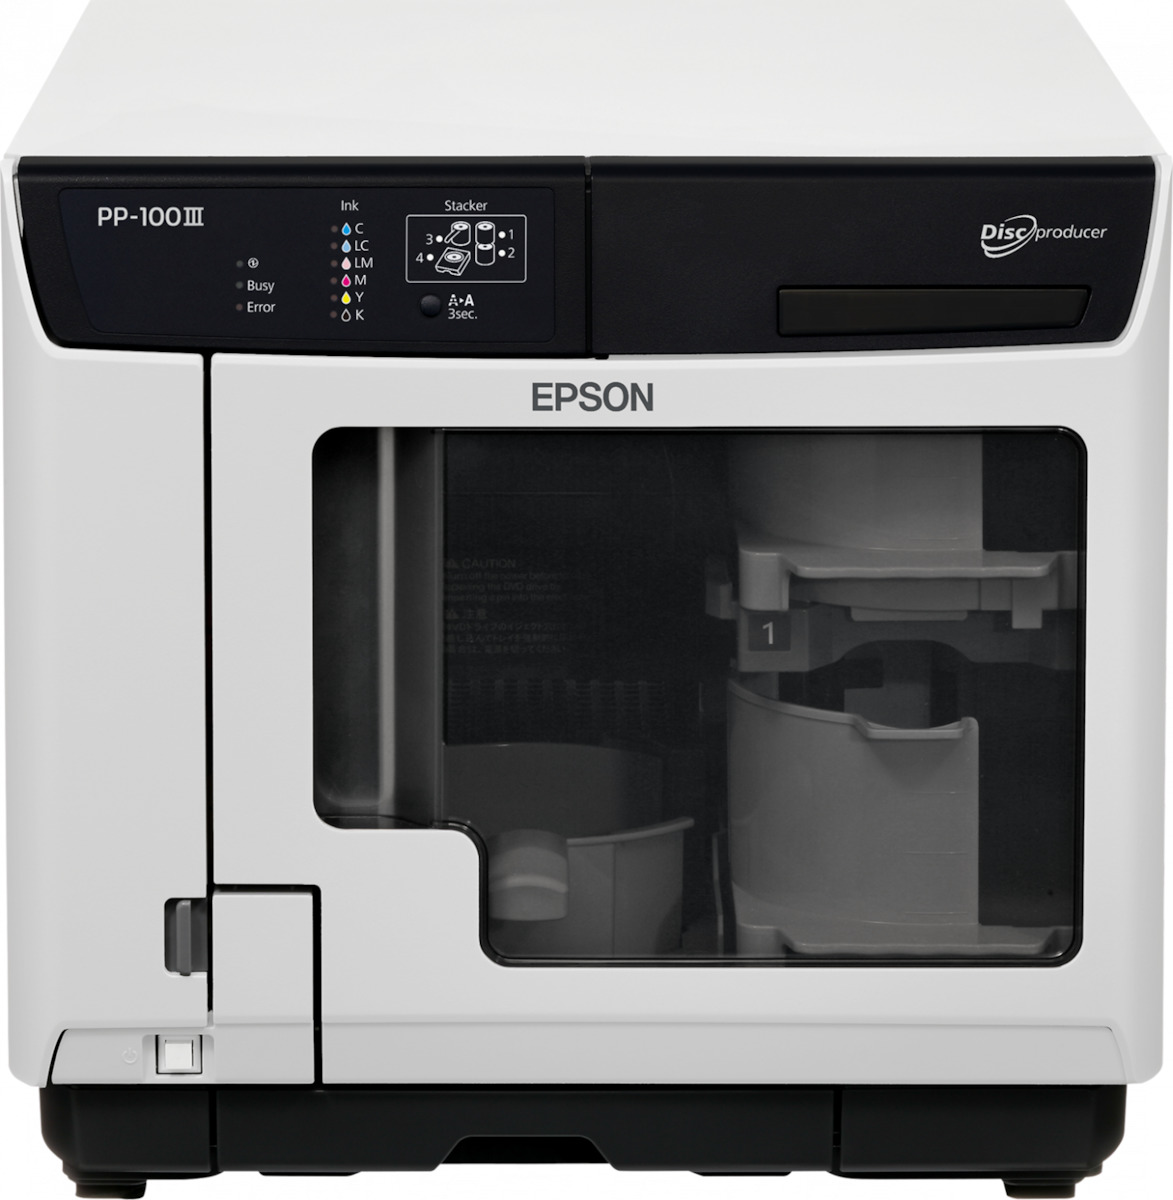 EPSON Printer PP-100iii Auto Disc Producer C11CH40021